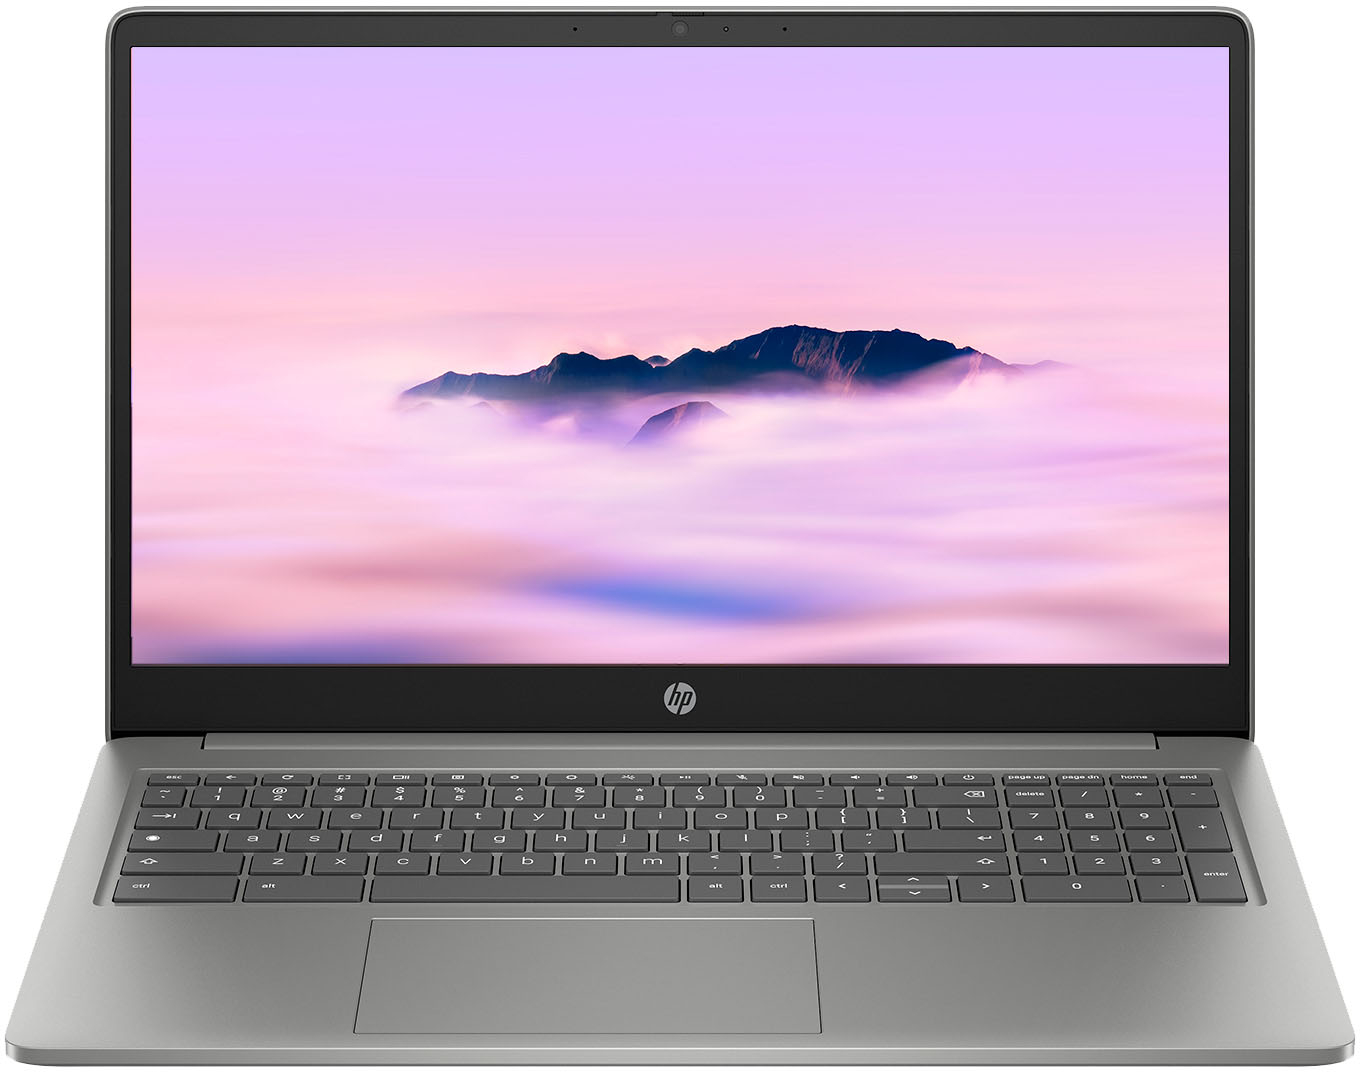 HP 15.6 Full HD Chromebook Plus Laptop Intel Core i3 8GB Memory